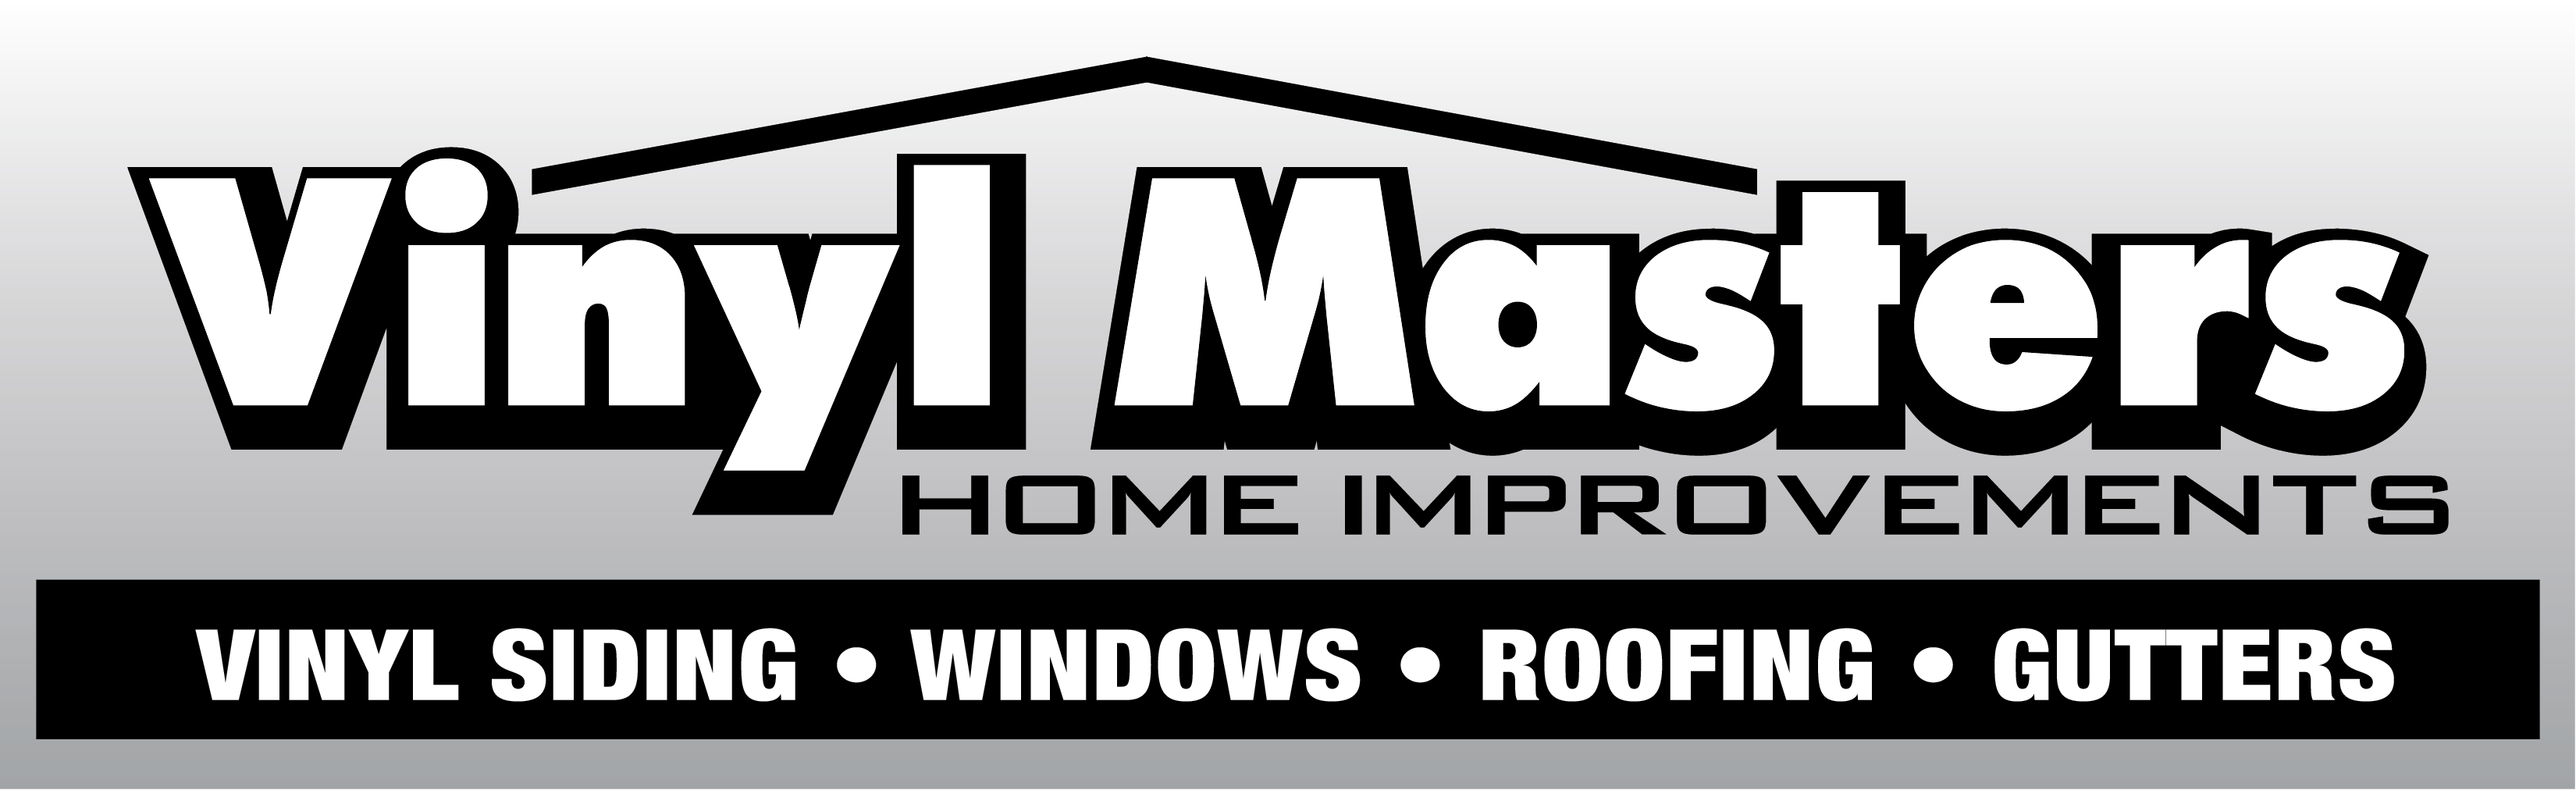 Vinyl Masters Home Improvements Logo